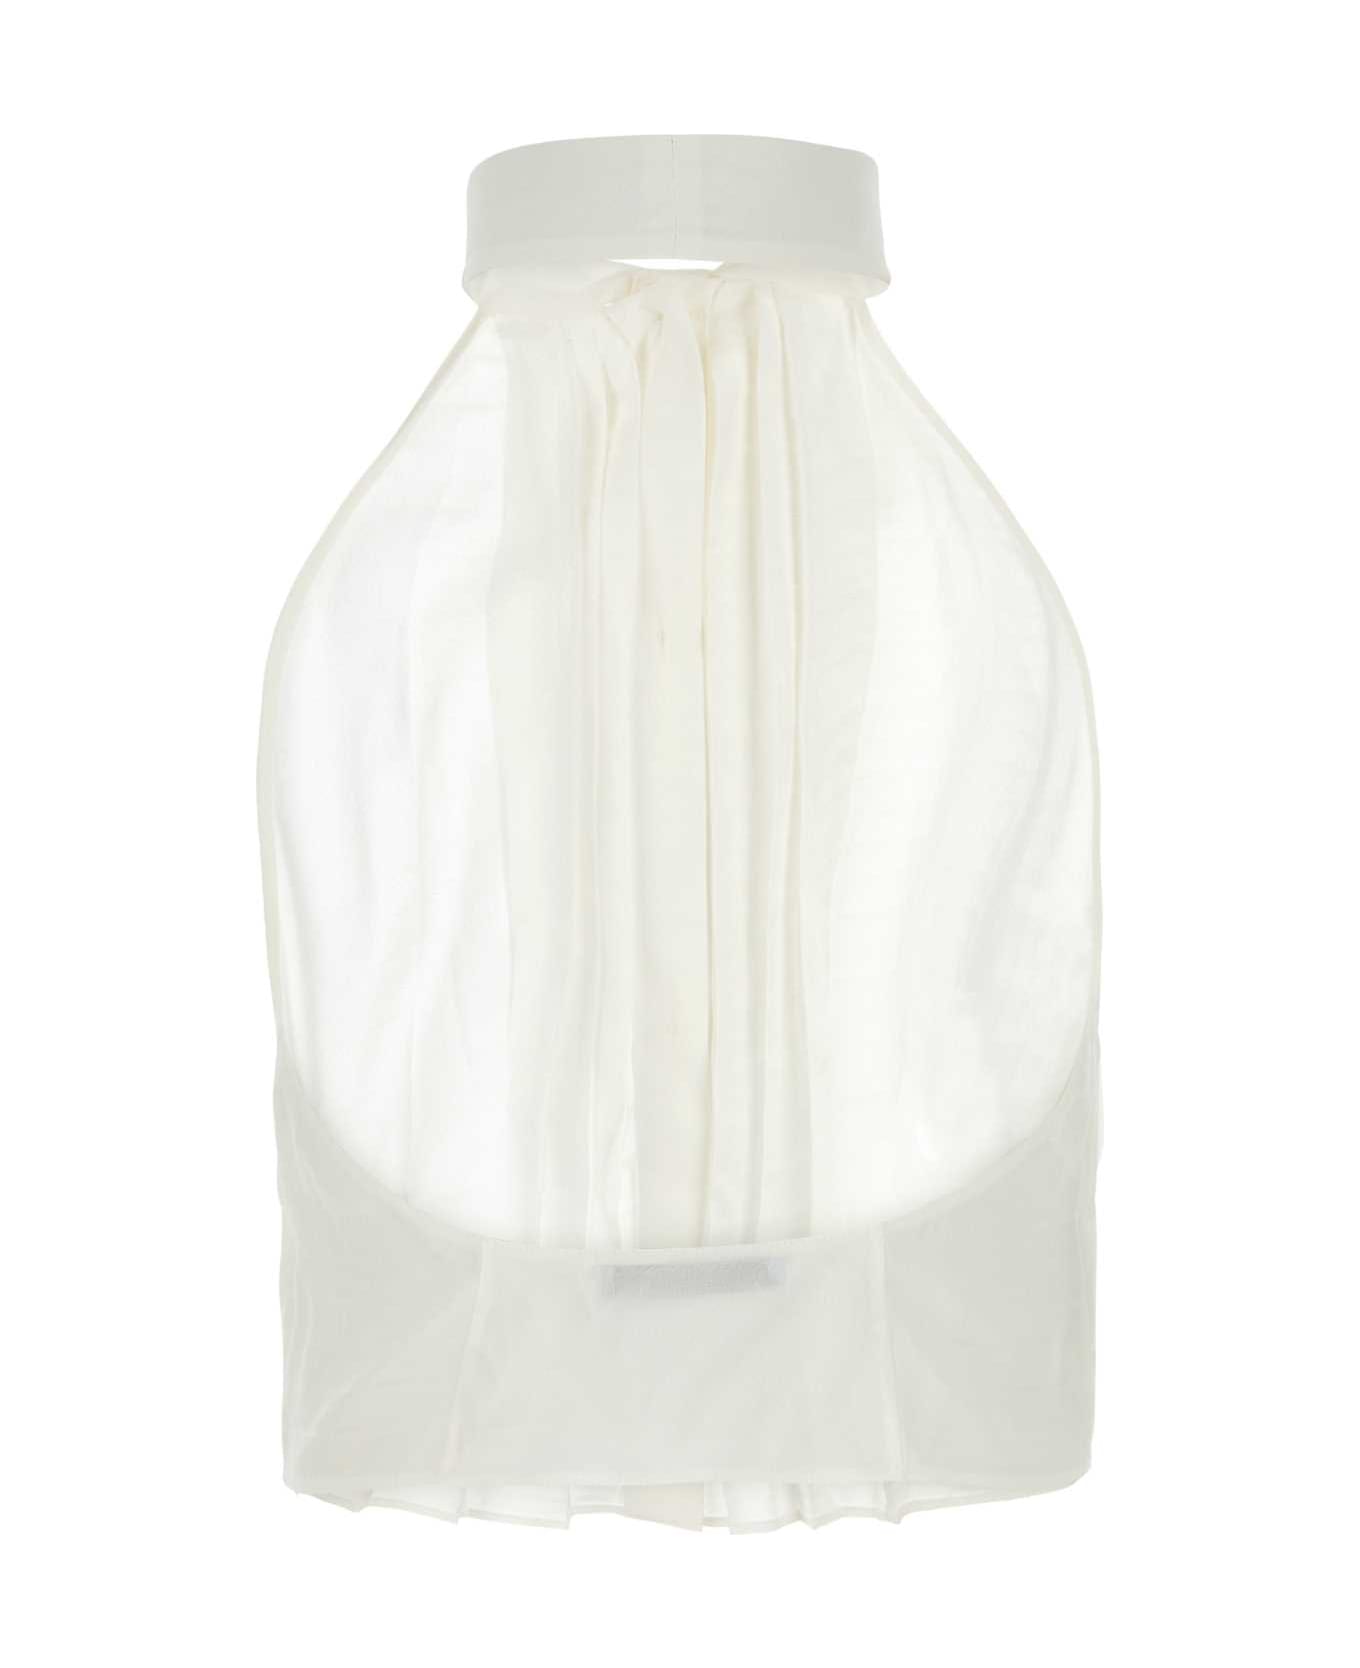 Prada White Silk Top - BIANCO フリース